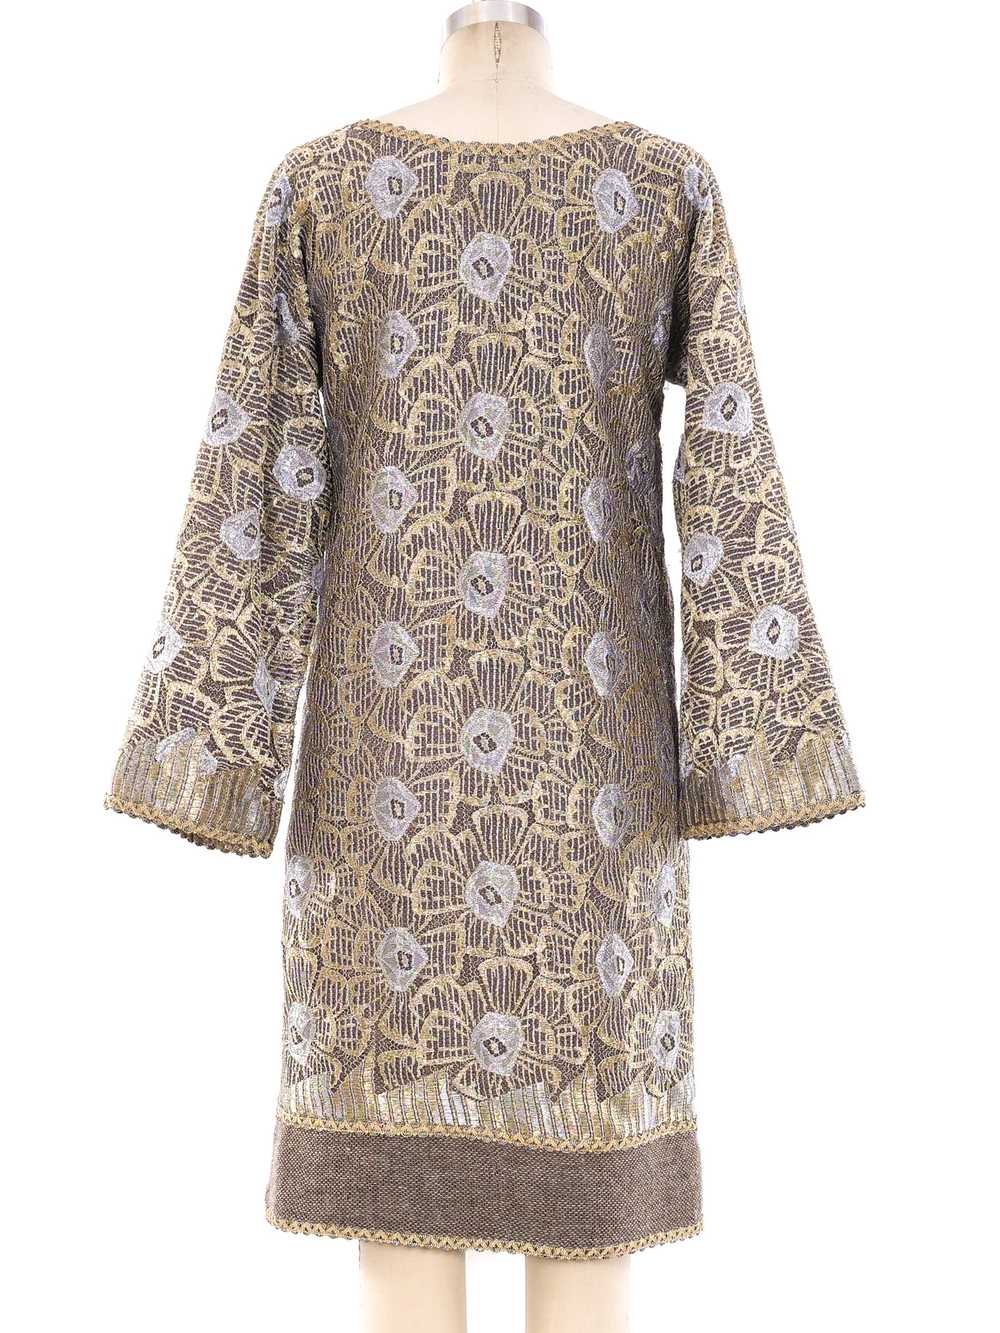 Geoffrey Beene Metallic Floral Embroidered Dress - image 4